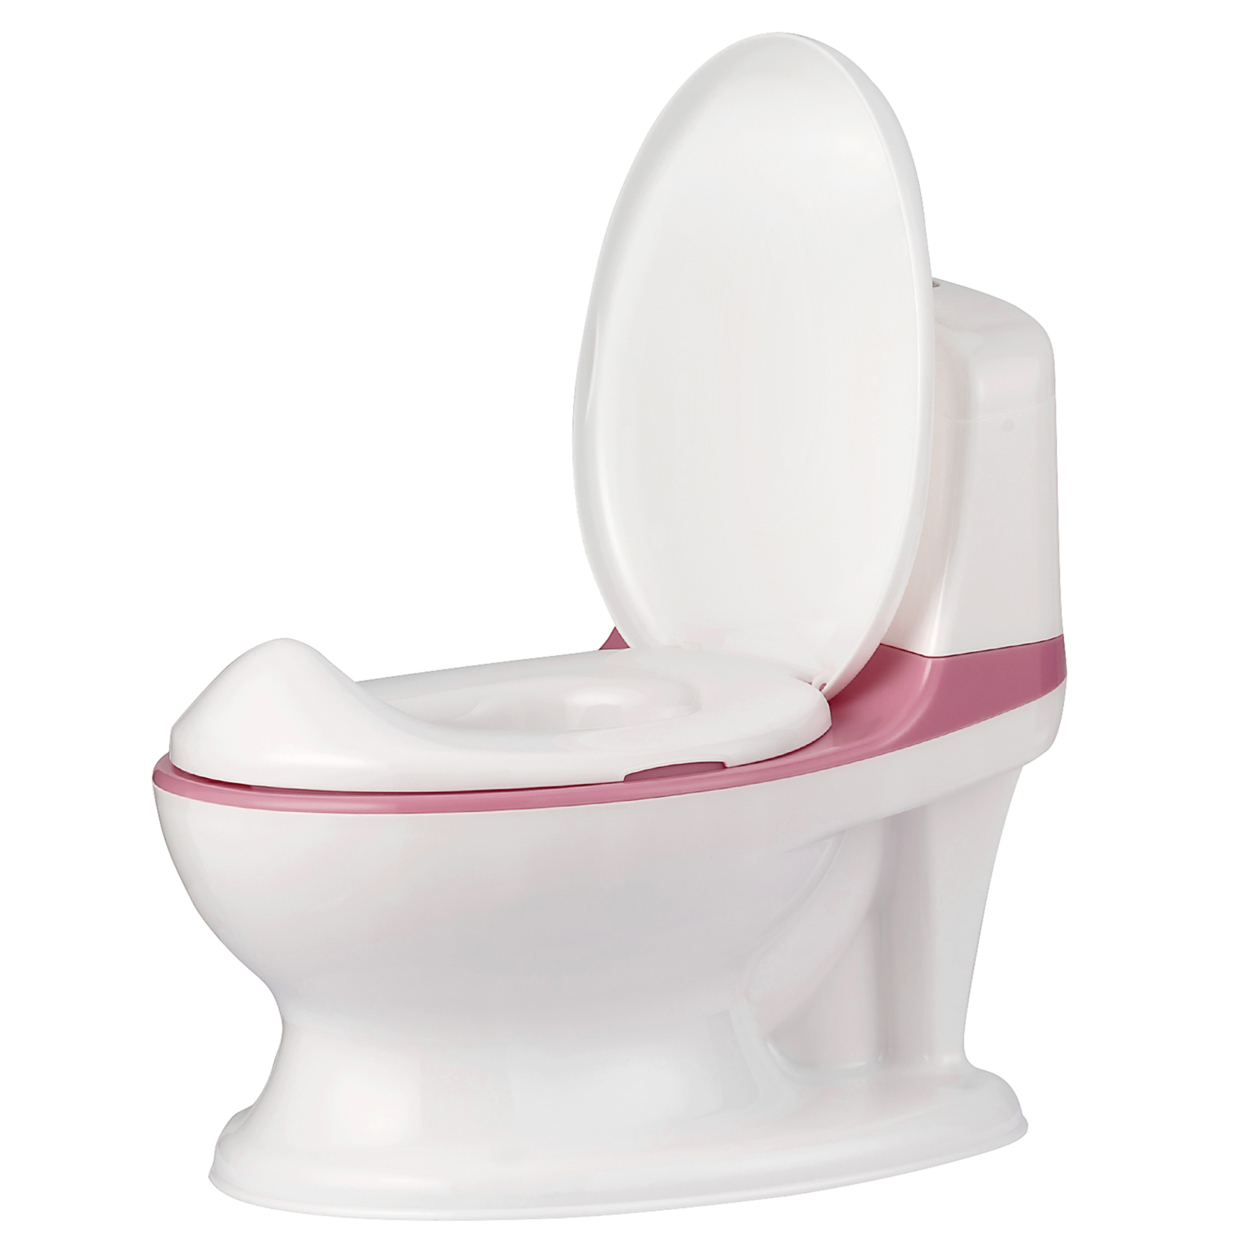 Realistic Potty Training Toilet Kids Toddlers W/ Flush Sound Blue/Gray/Pink - Grey